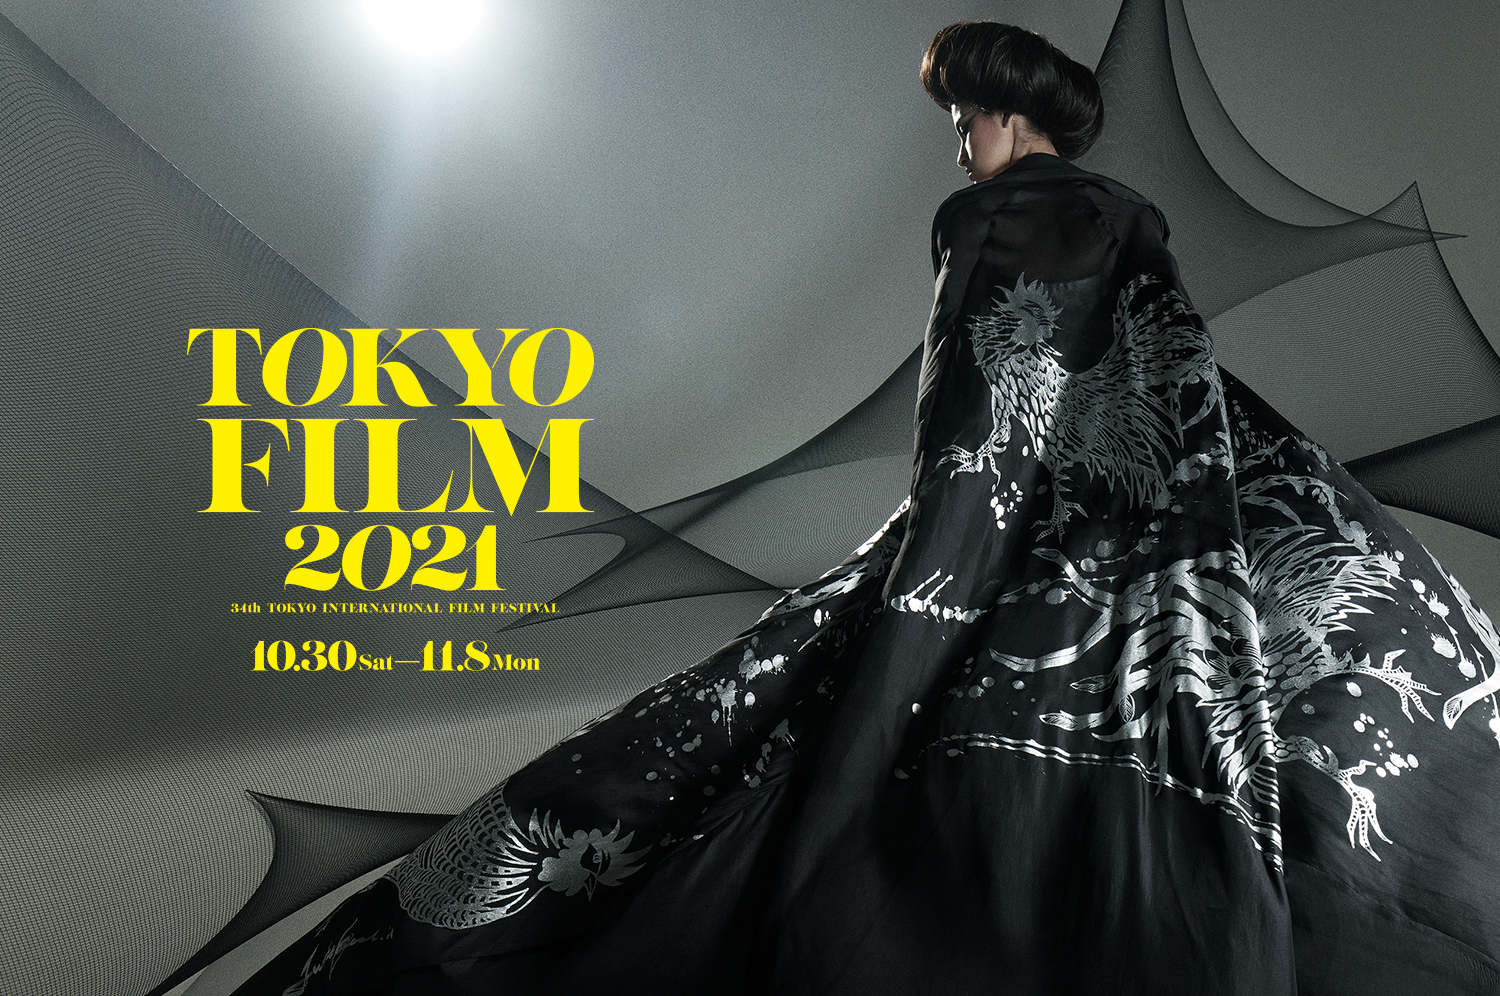 TOKYO FILM 2021 第34回東京国際映画祭 ビジュアル監修コシノジュンコ